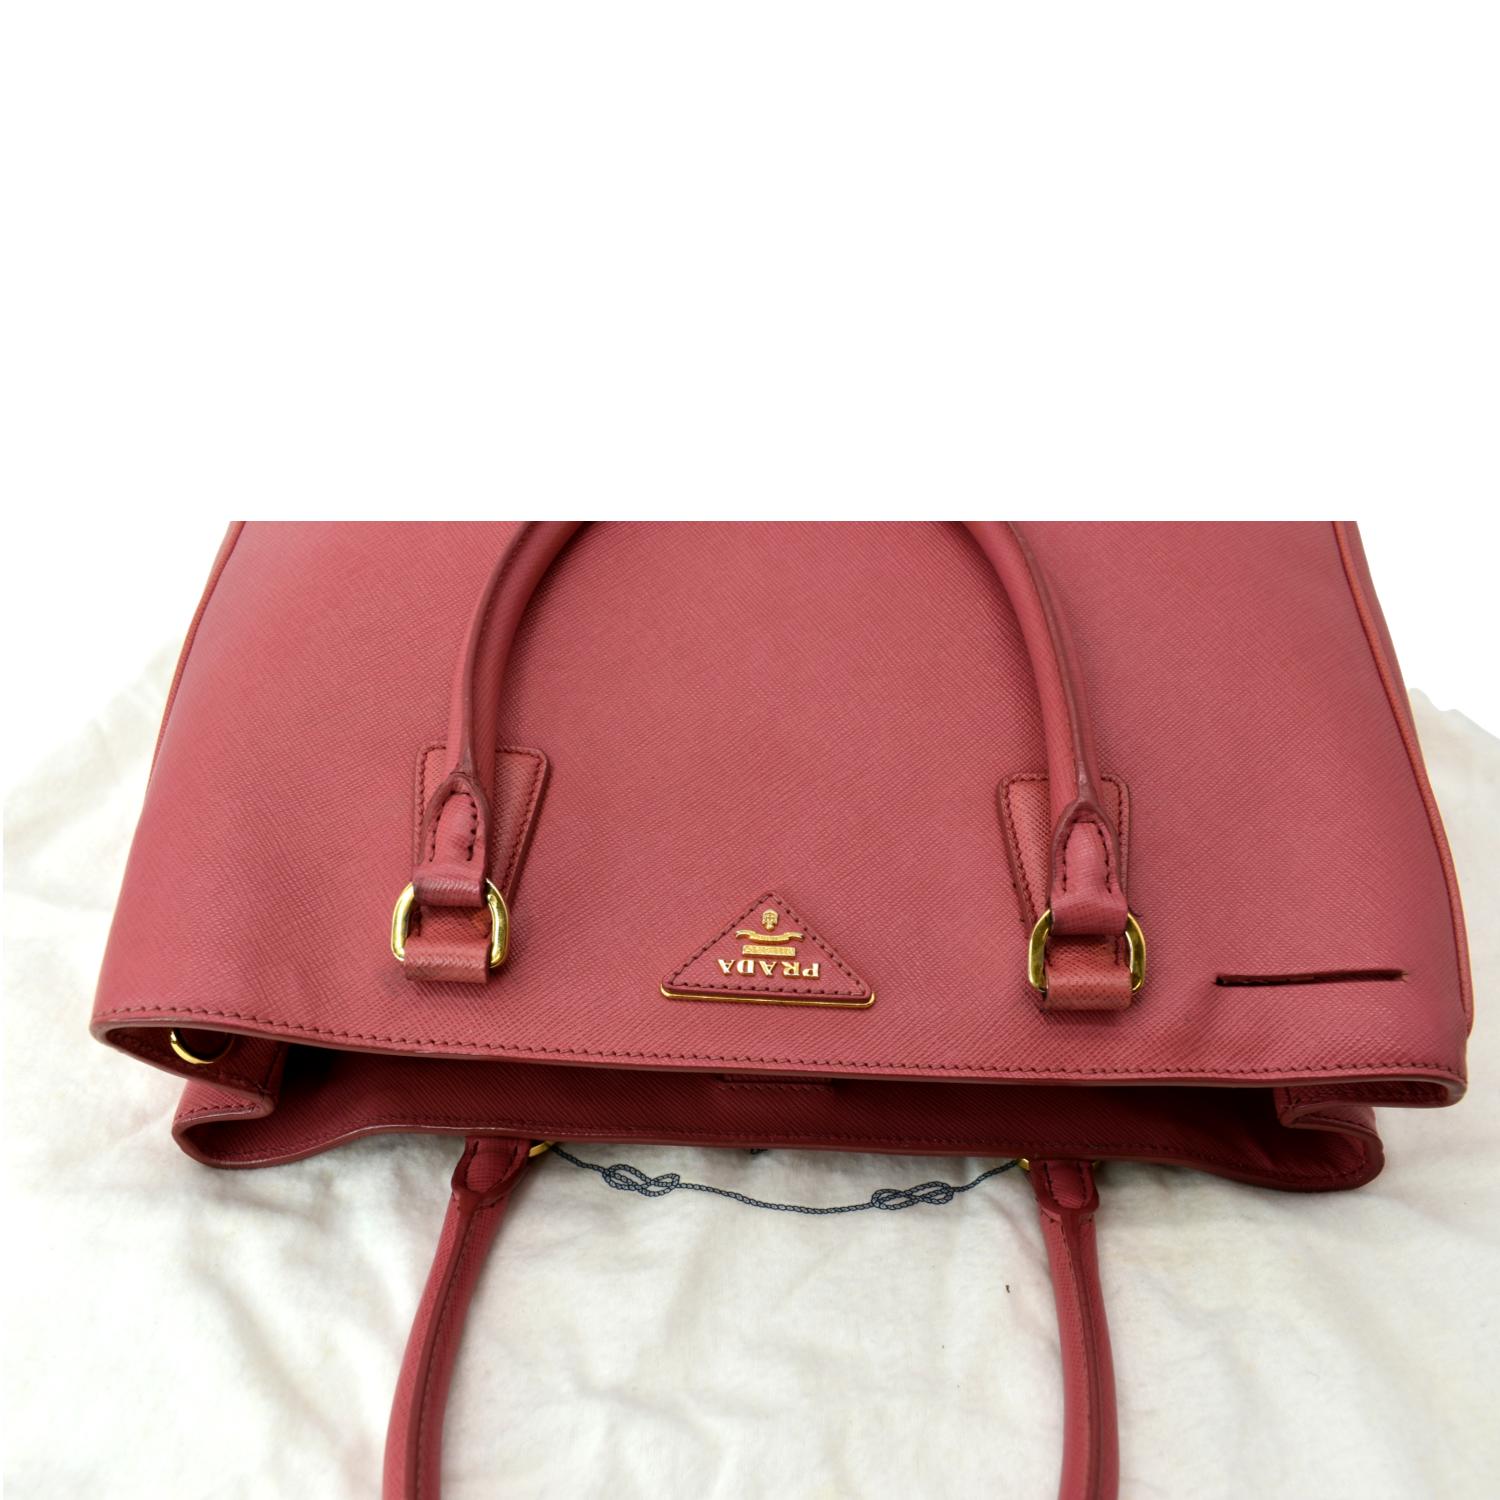 Prada Galleria Pink Leather Tote Bag (Pre-Owned)